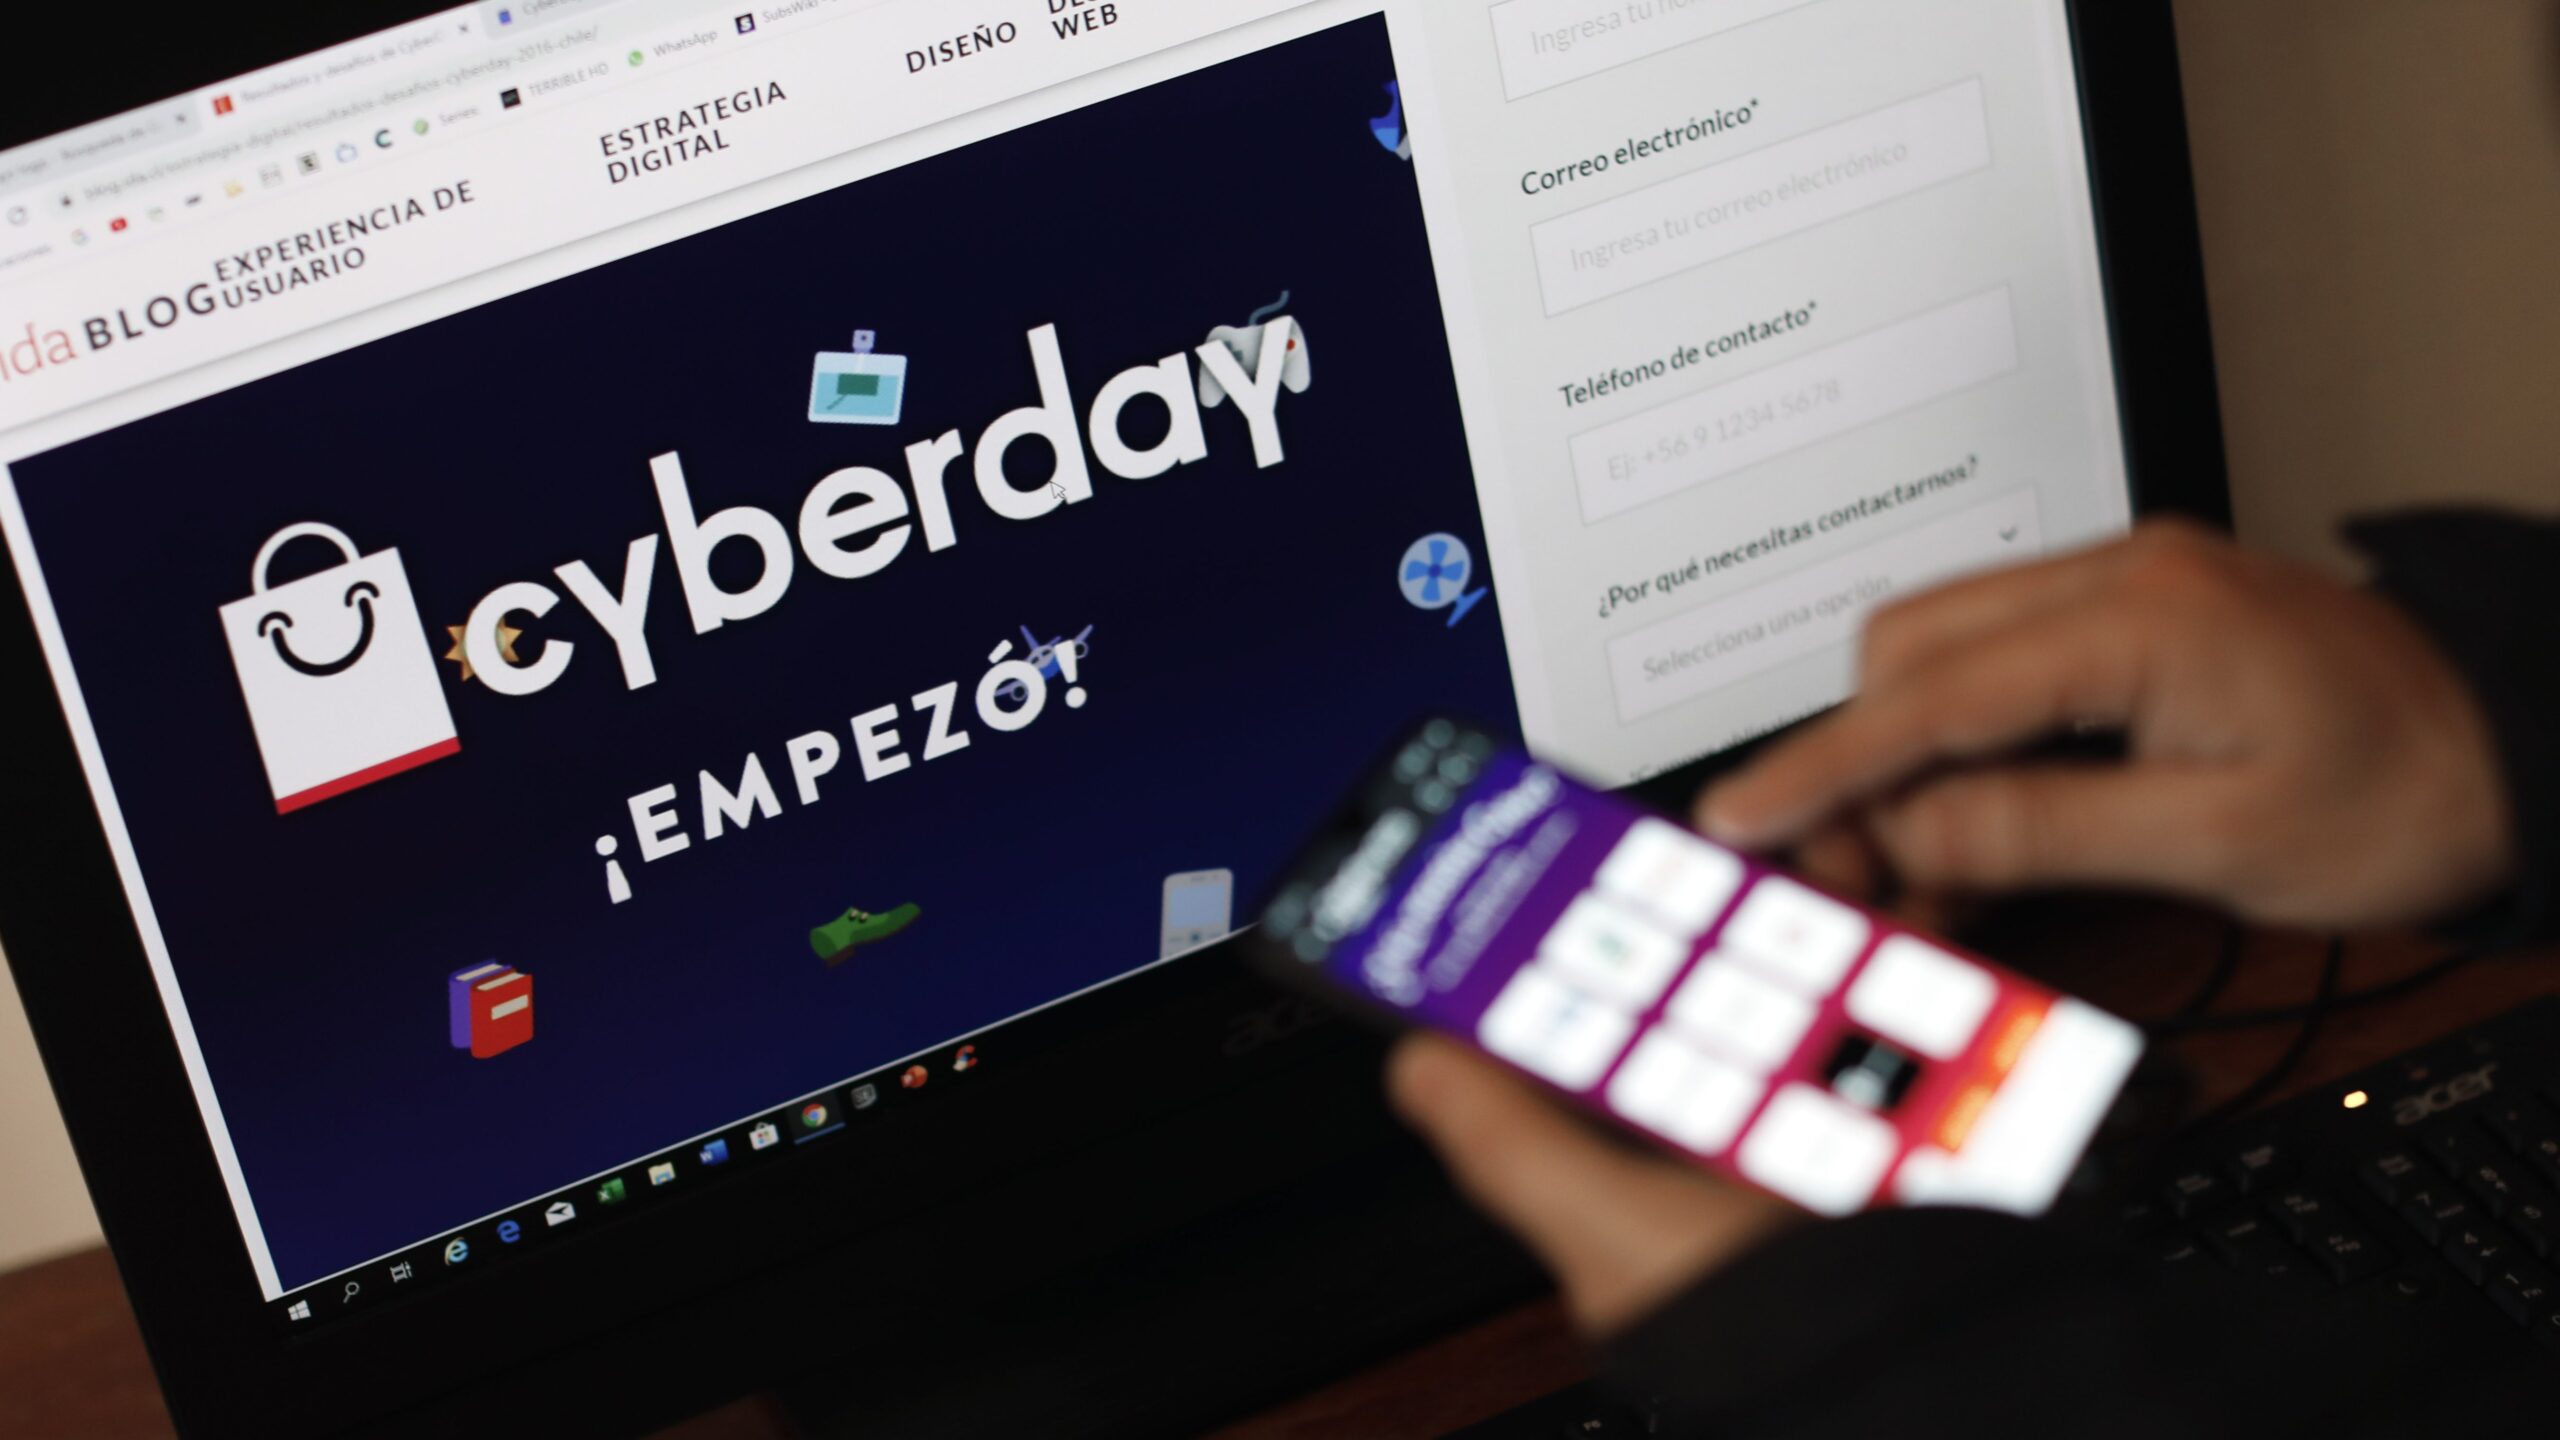 cyberday / Agencia Uno